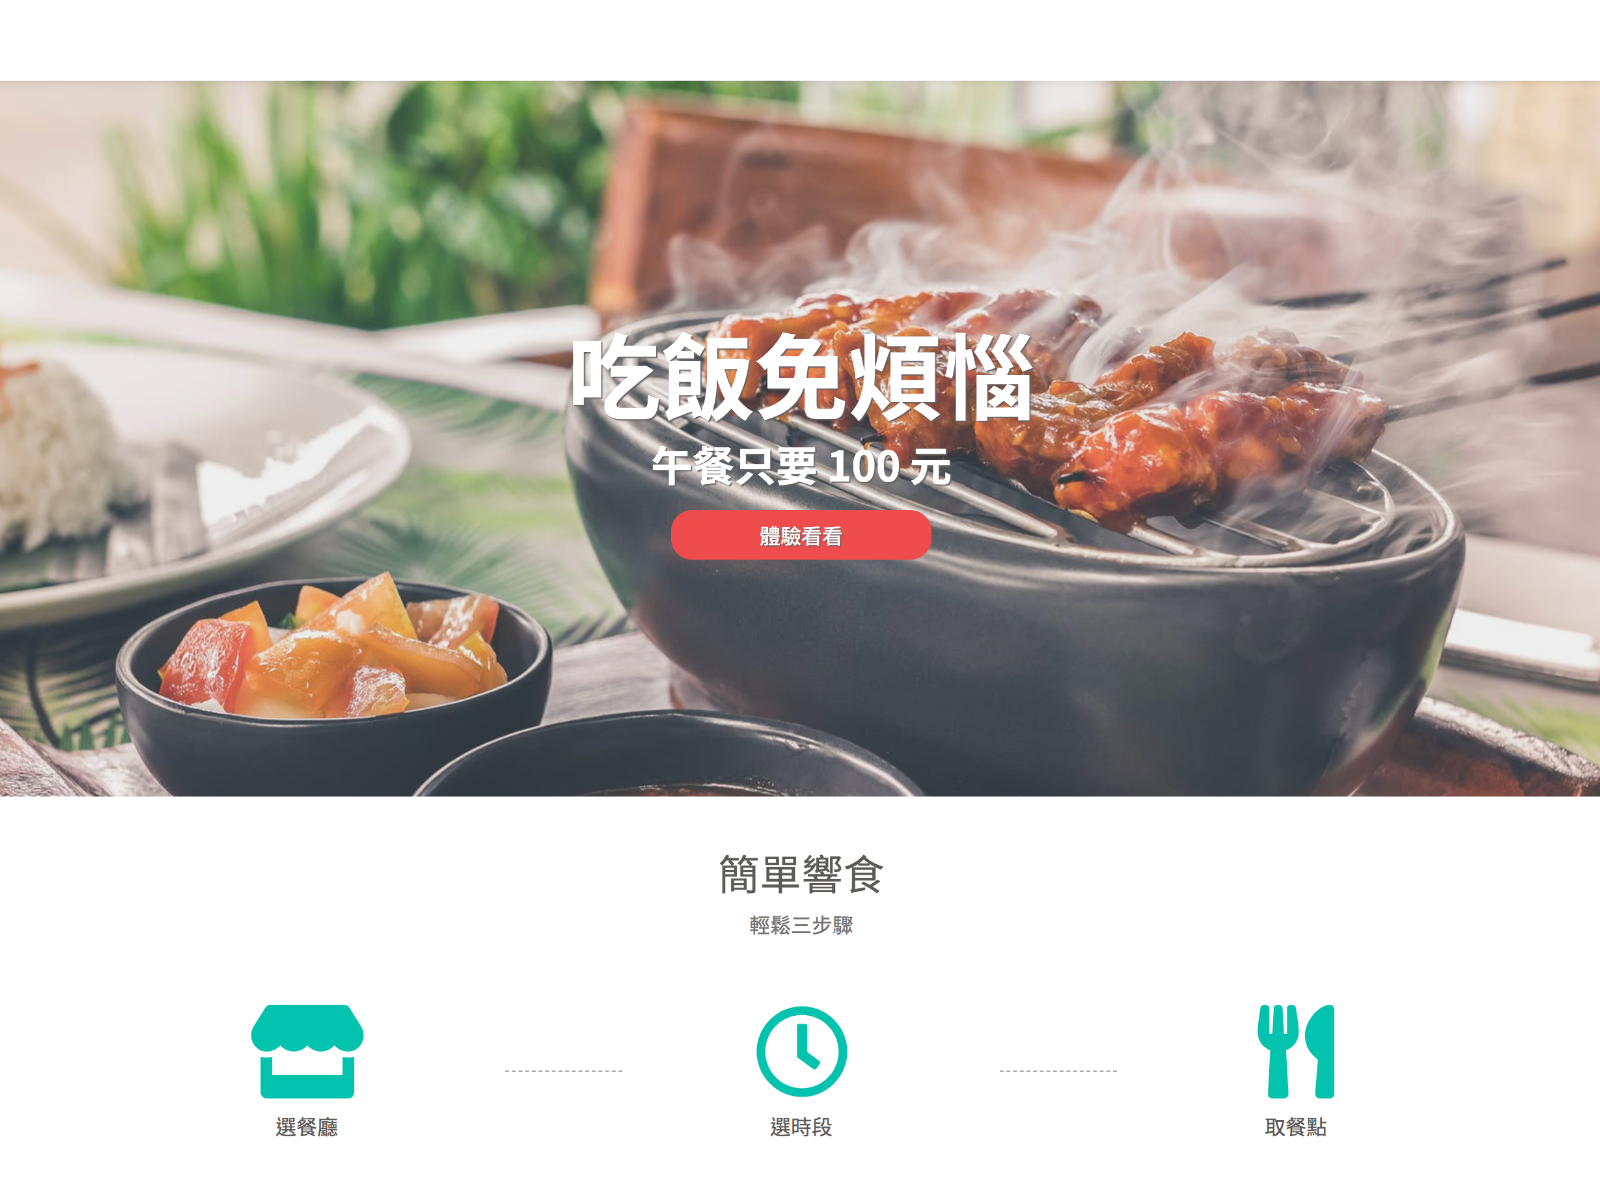 Cover of Nextmeal "Food Reservation" e-commerce platform.